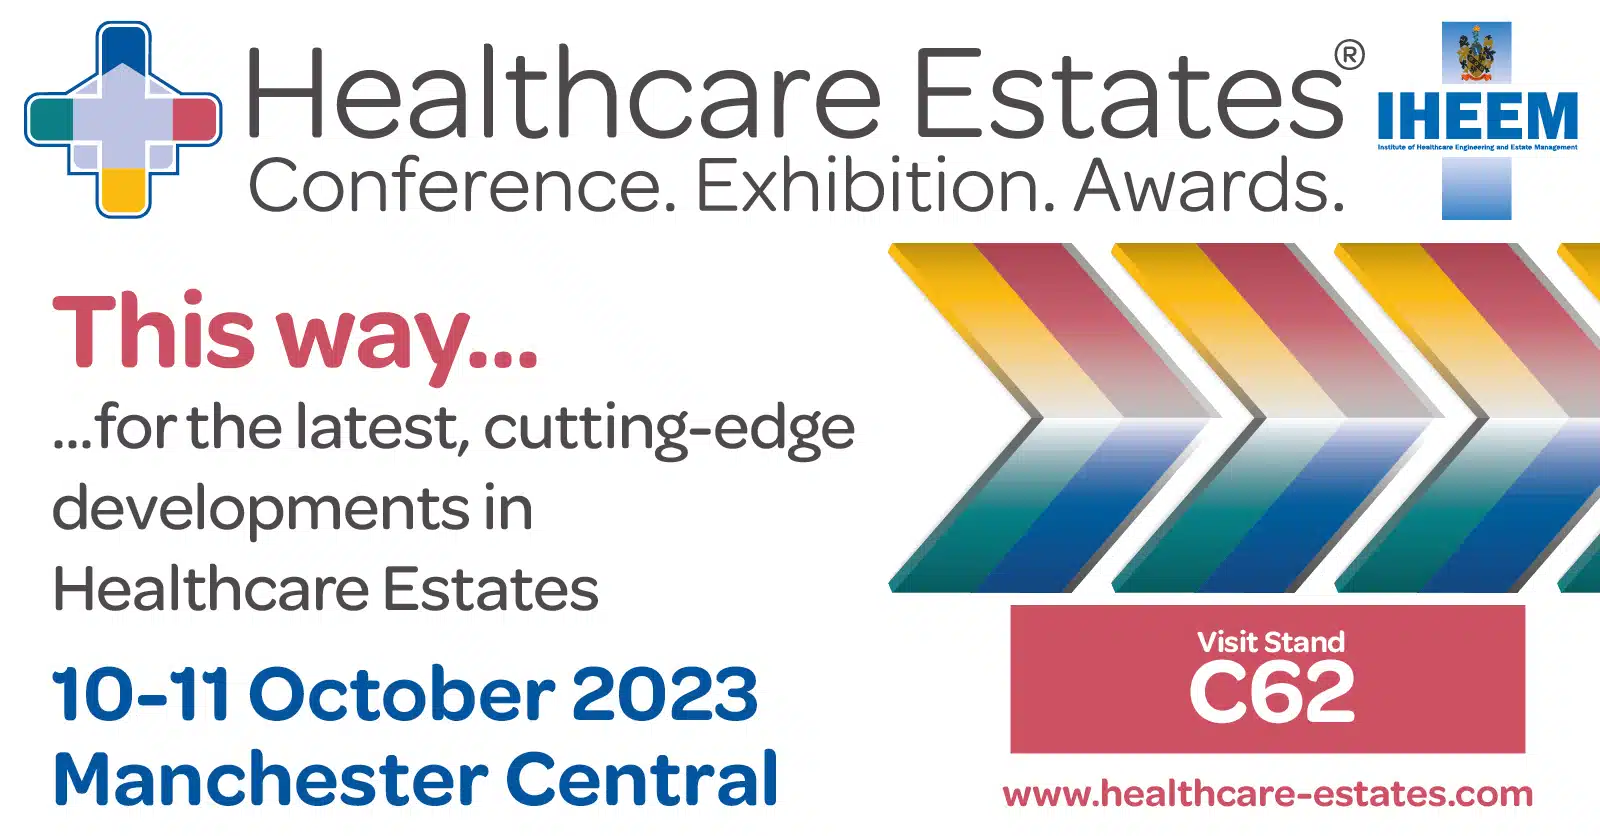 Healthcare Estates Conference